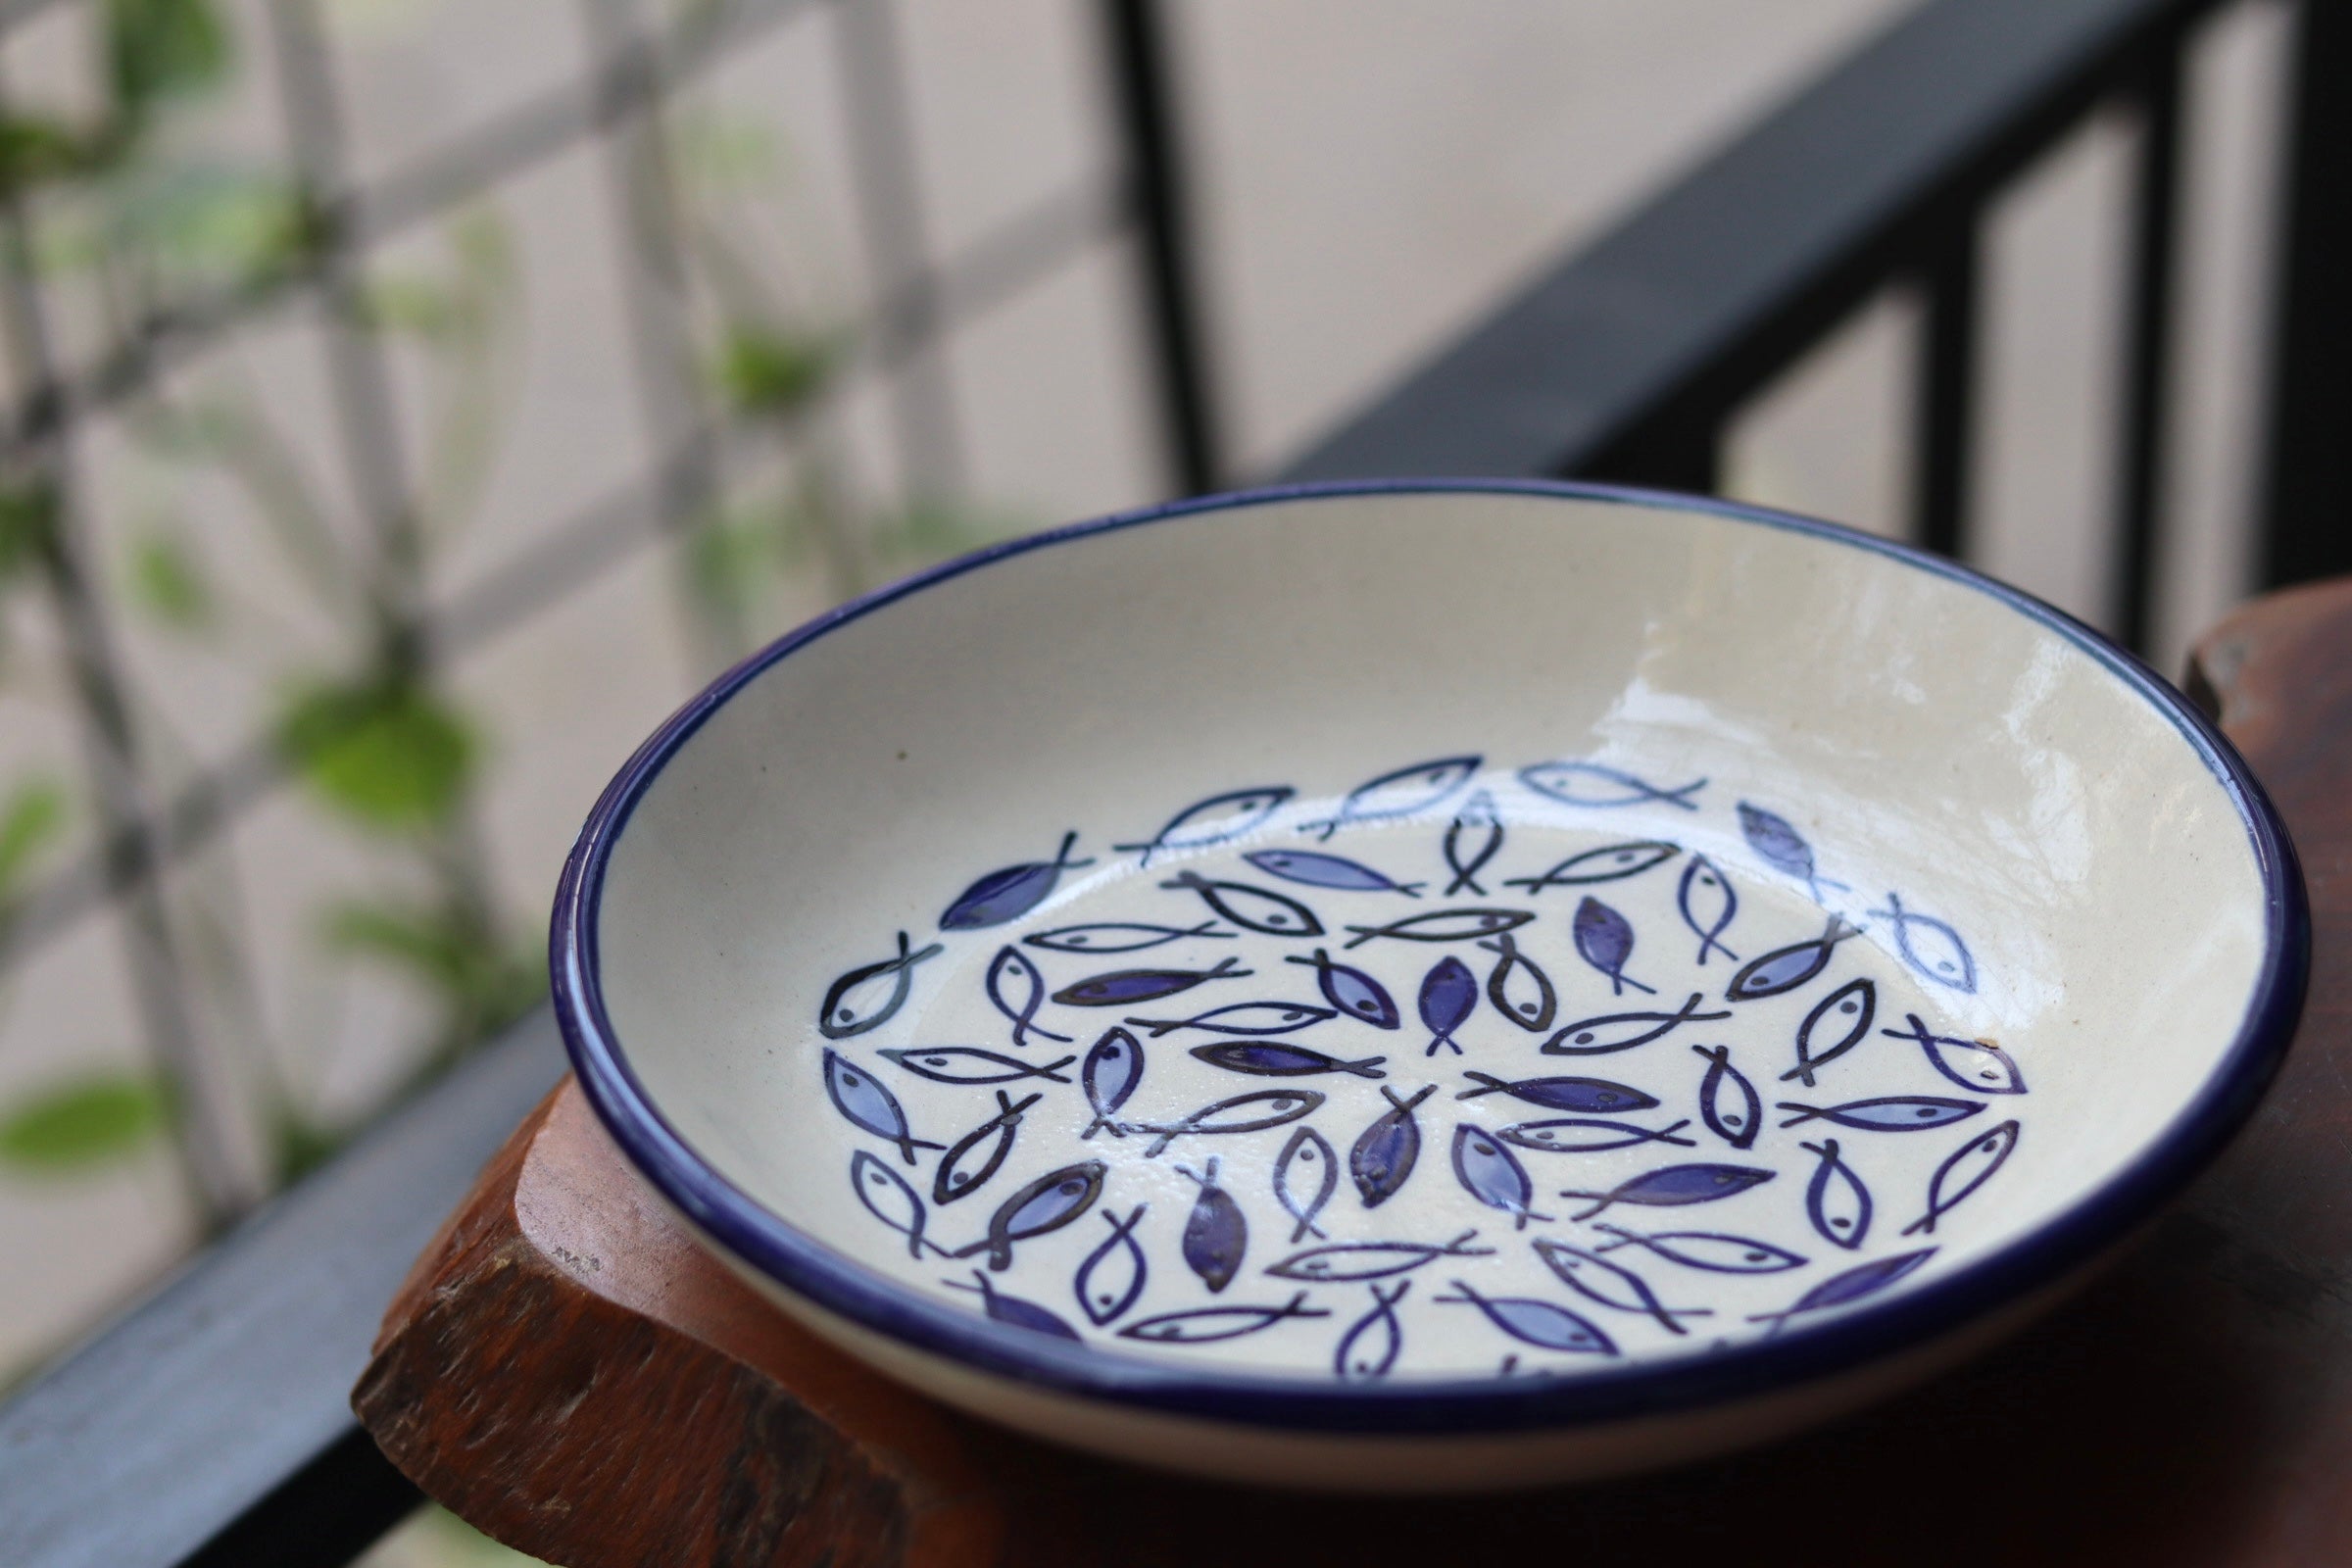 Handmade ceramic fish plate on table